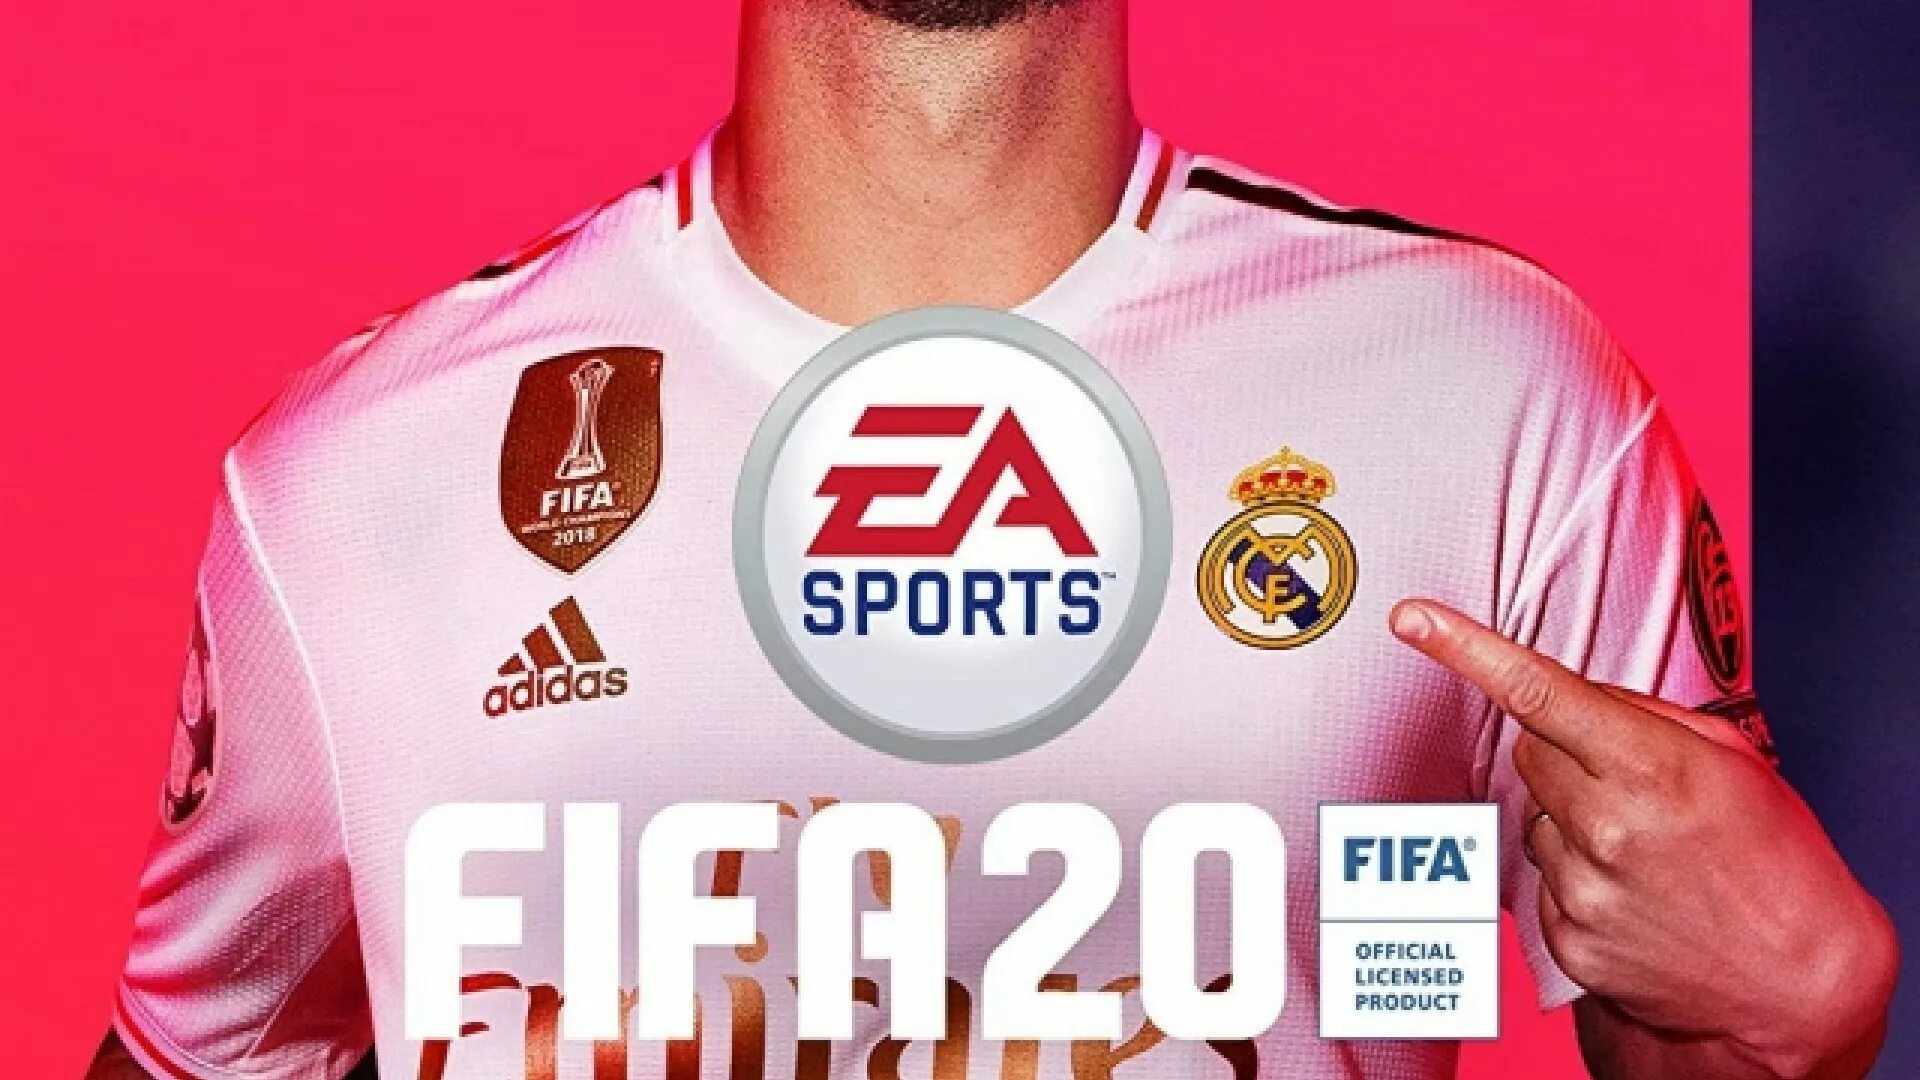 Fifa 20 origin. ФИФА 20. FIFA 2020 обложка. Обложка игры FIFA 20. ФИФА 20 заставка.